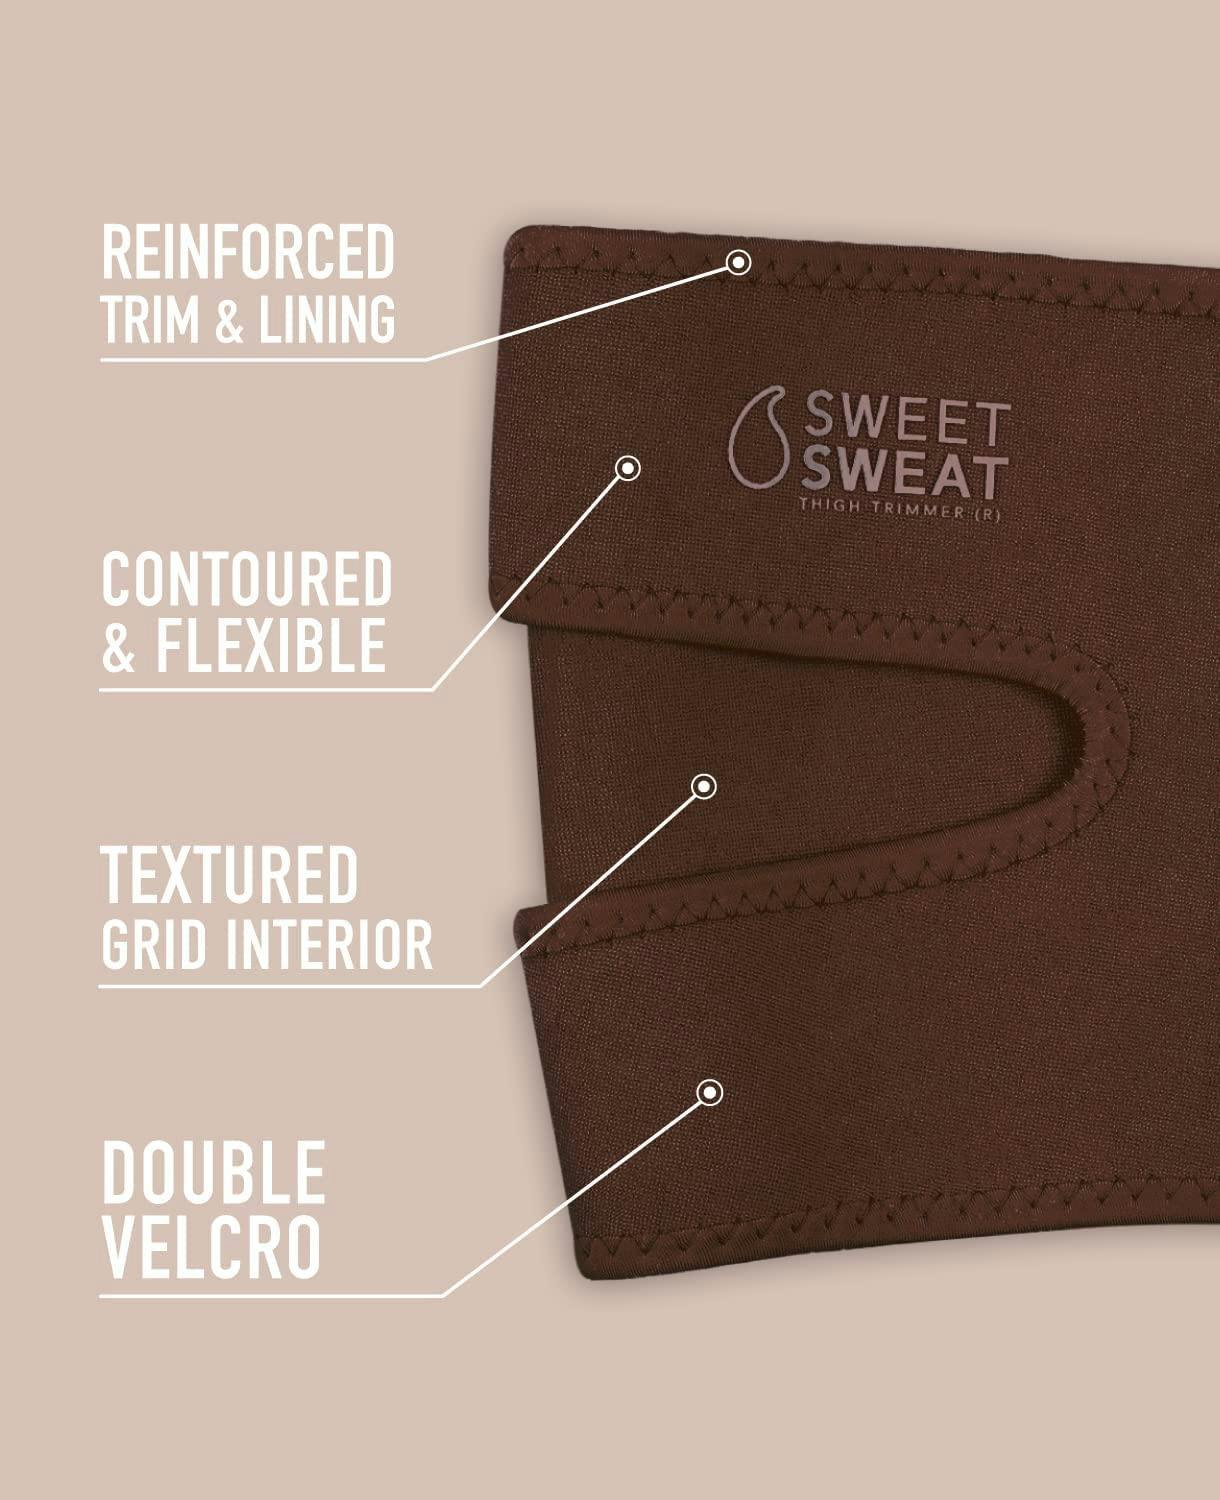 Reinforced Trim & Lining, Contoured & Flexible, Textured Grid Interior, Double Velcro